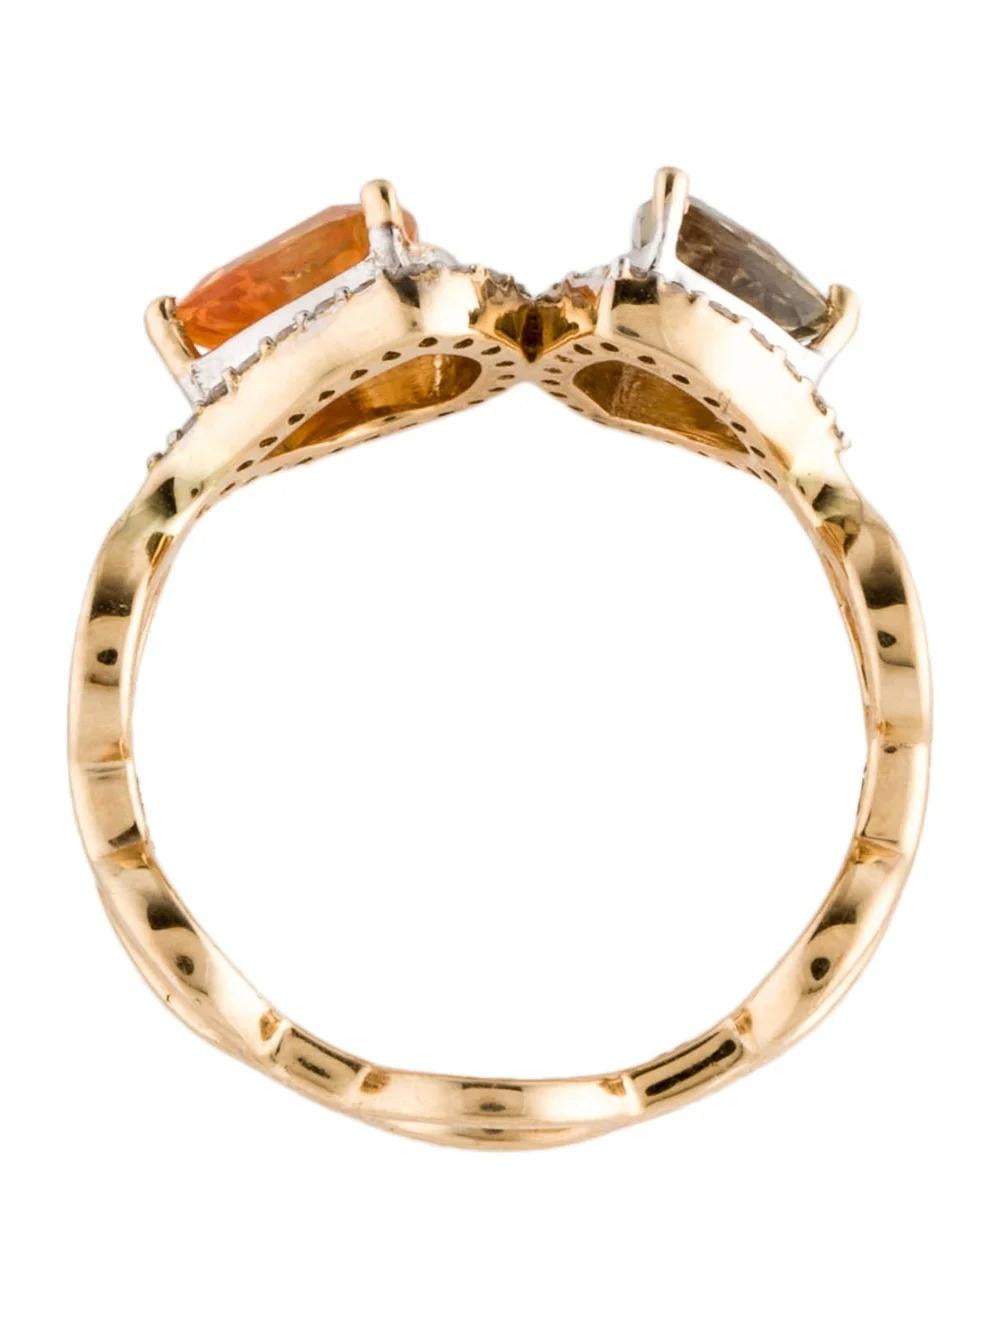 Women's Designer 14K Multi Sapphire & Diamond Cocktail Ring, Size 6.5, Gemstone Jewelry For Sale